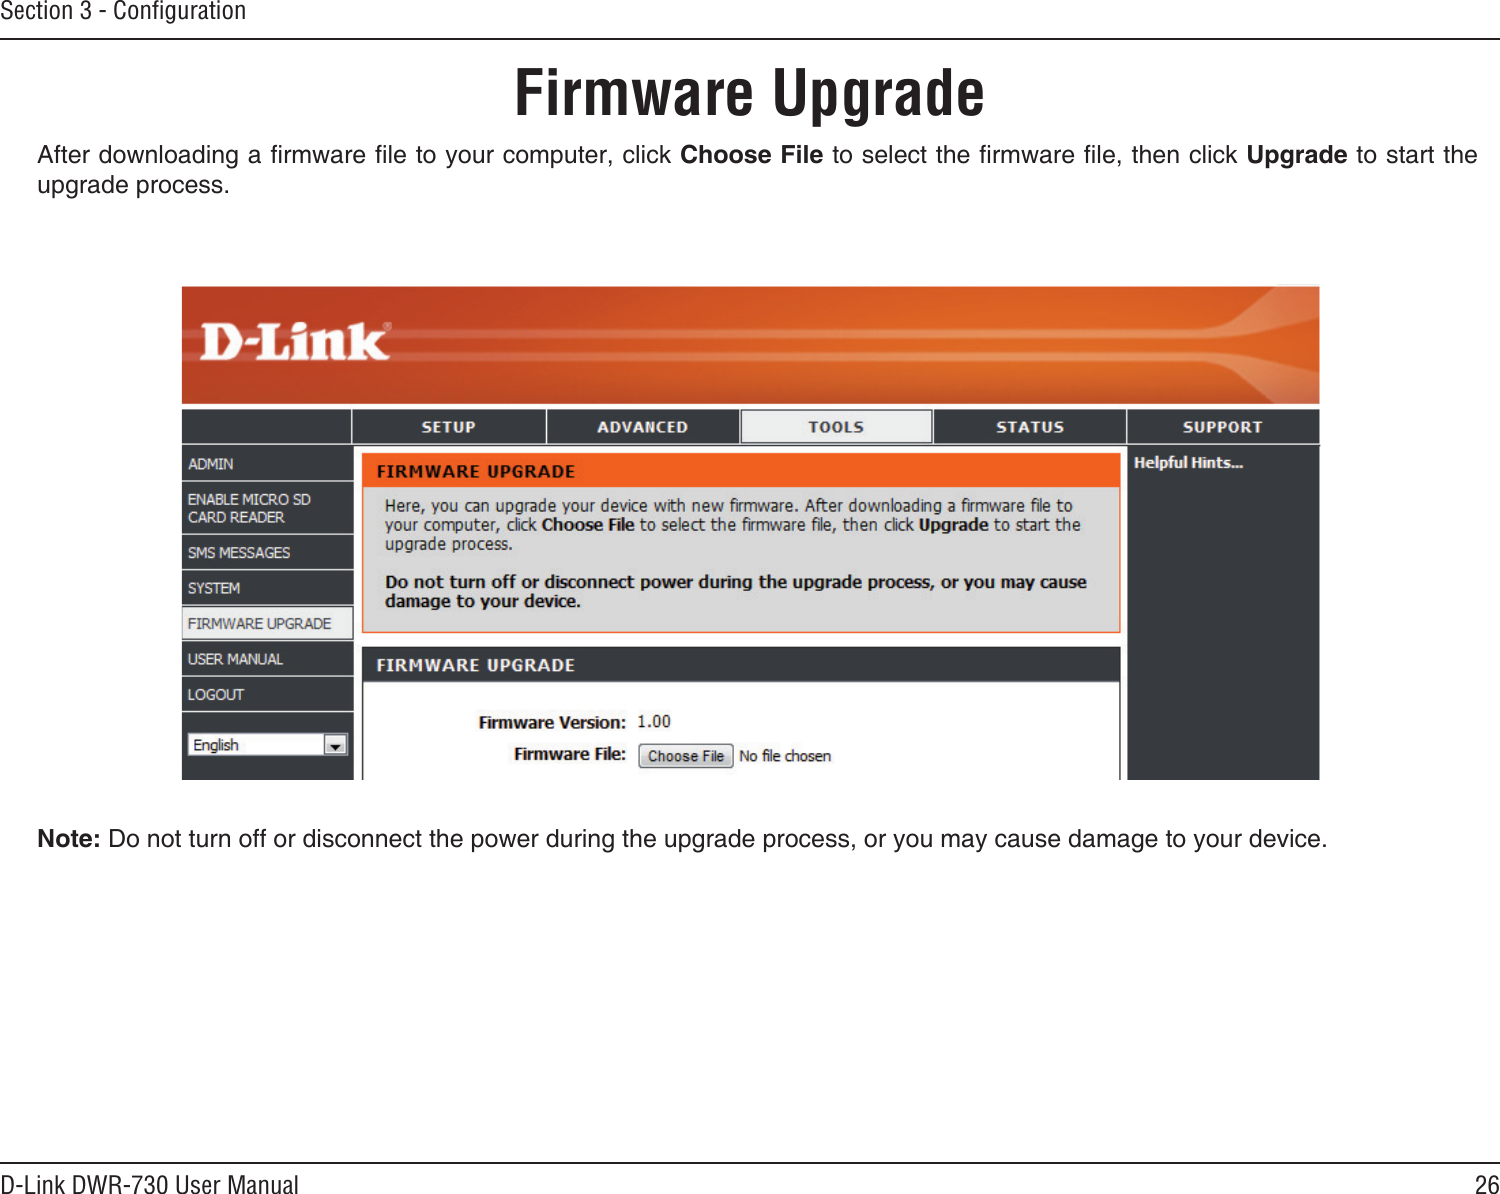 26D-Link DWR-730 User ManualSection 3 - ConﬁgurationFirmware Upgrade